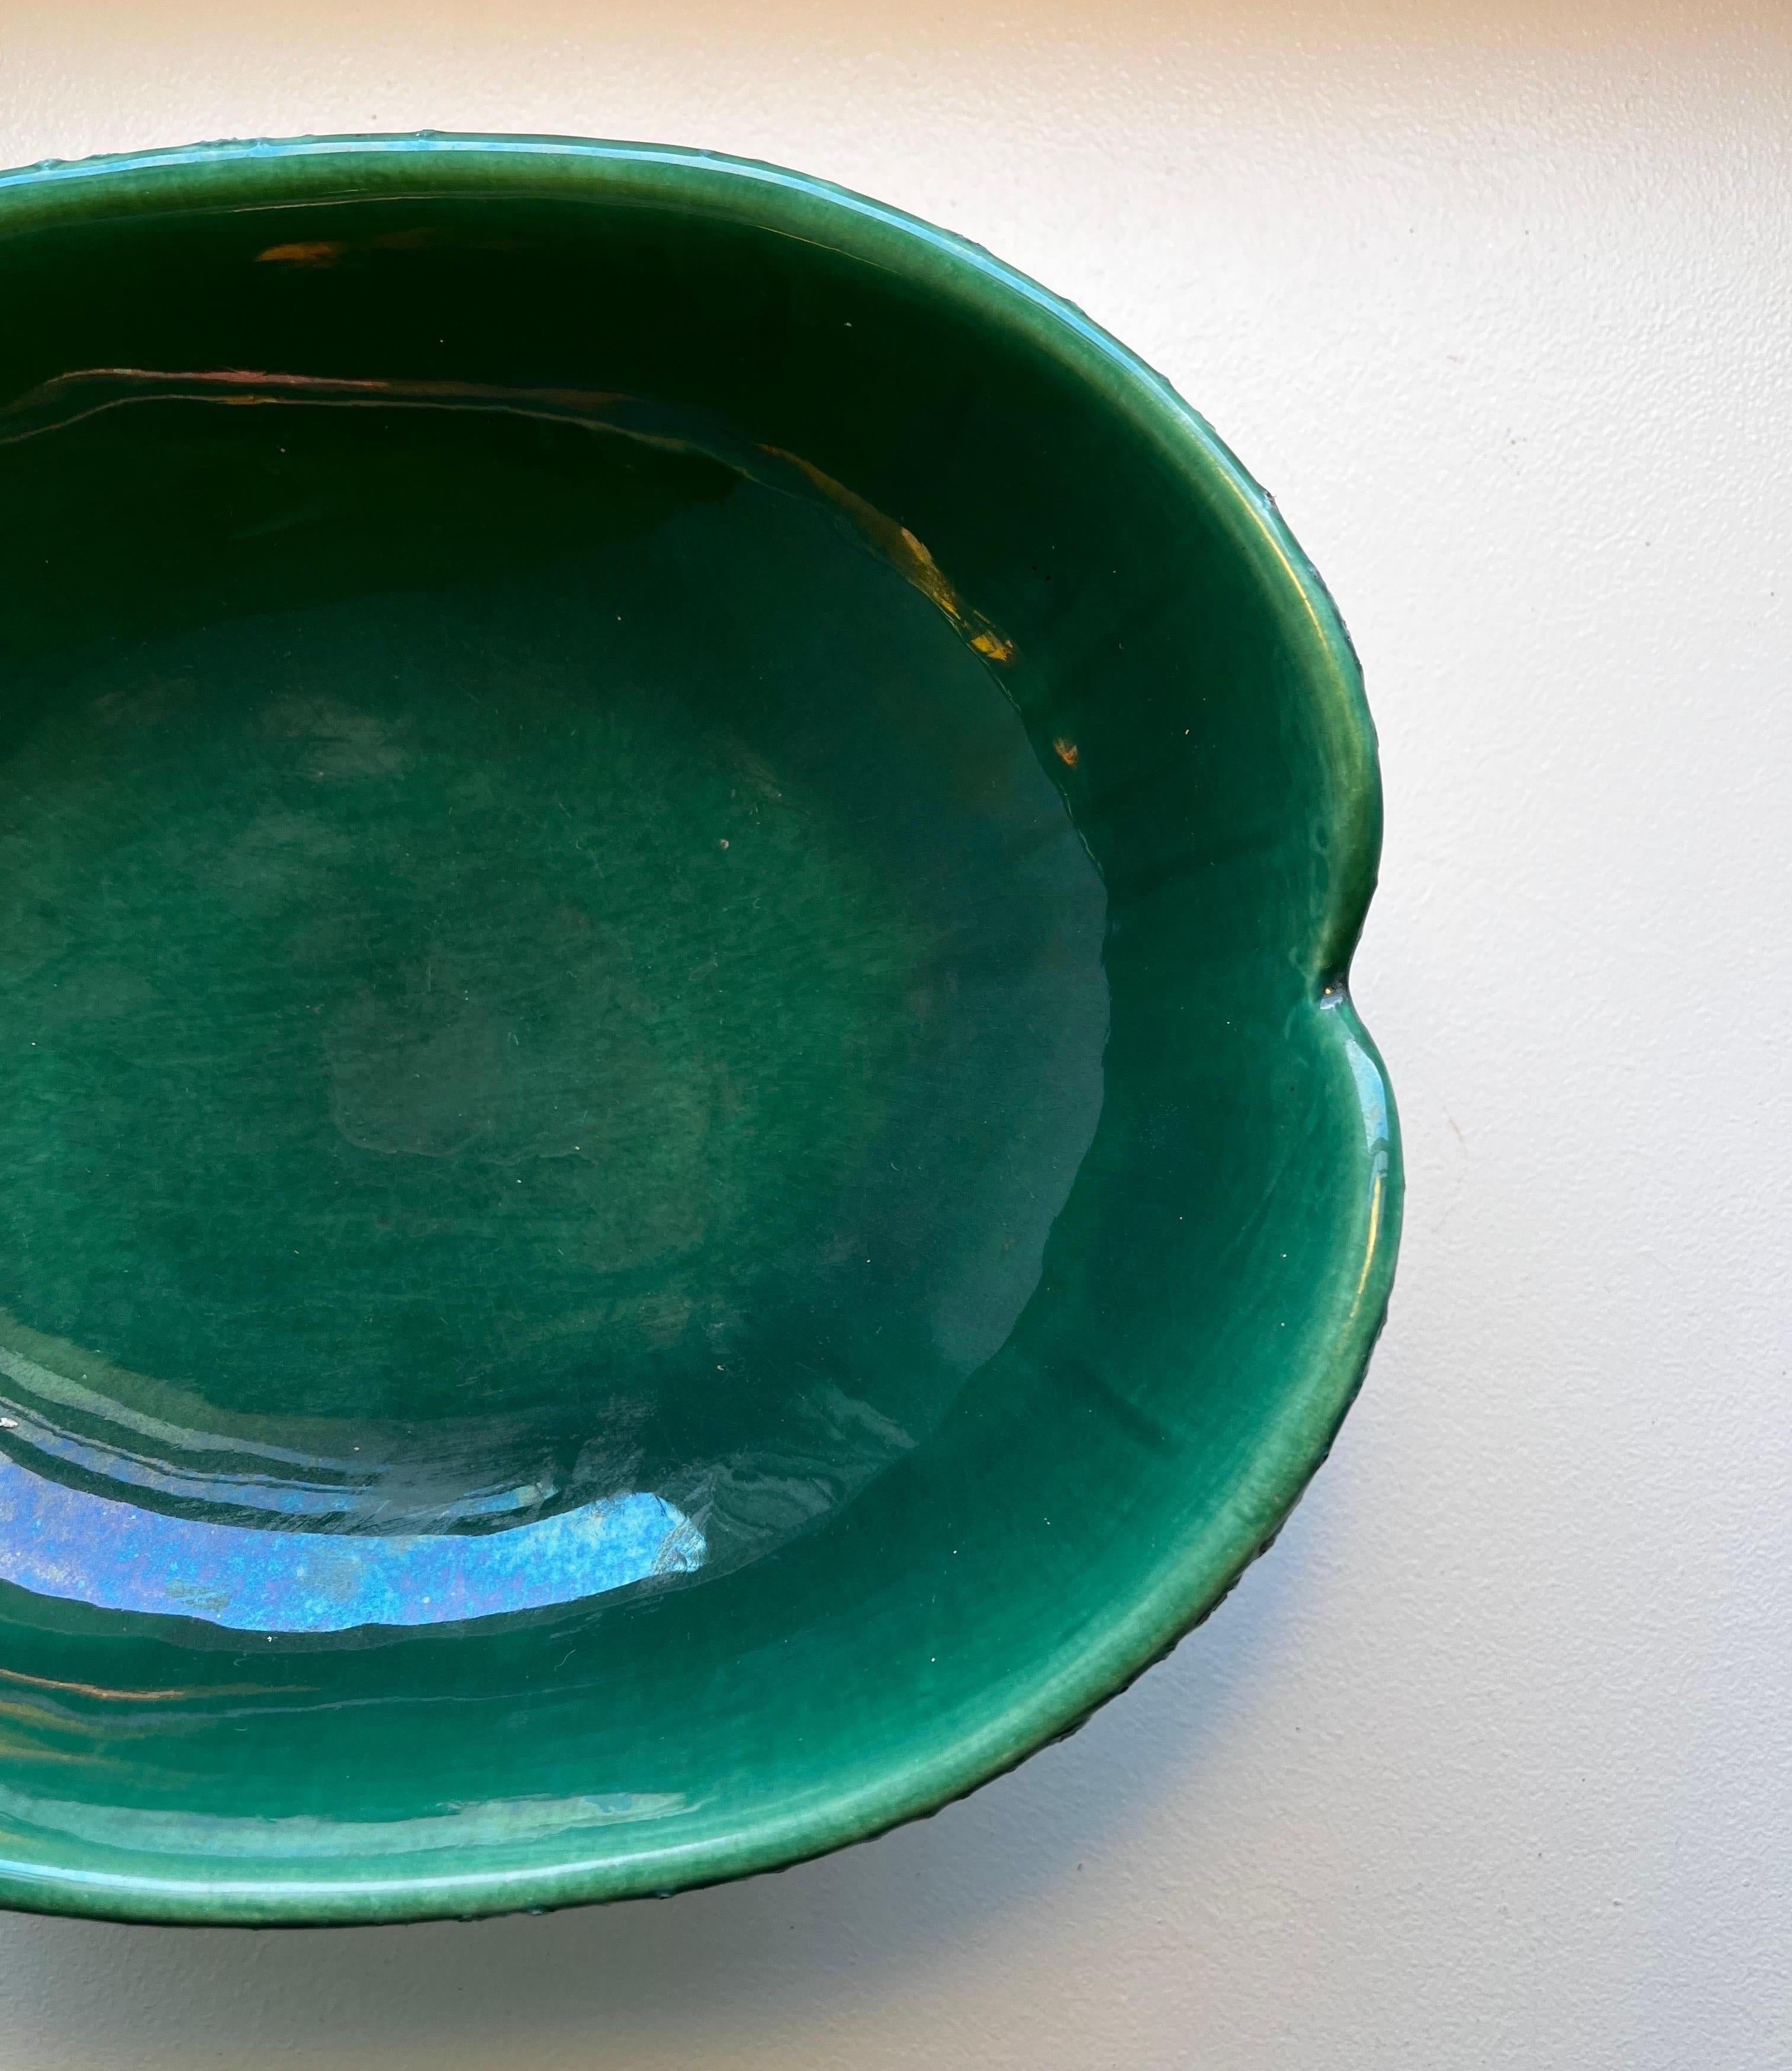 Vintage Royal Haeger Pottery Pedestal Bowl with Green 